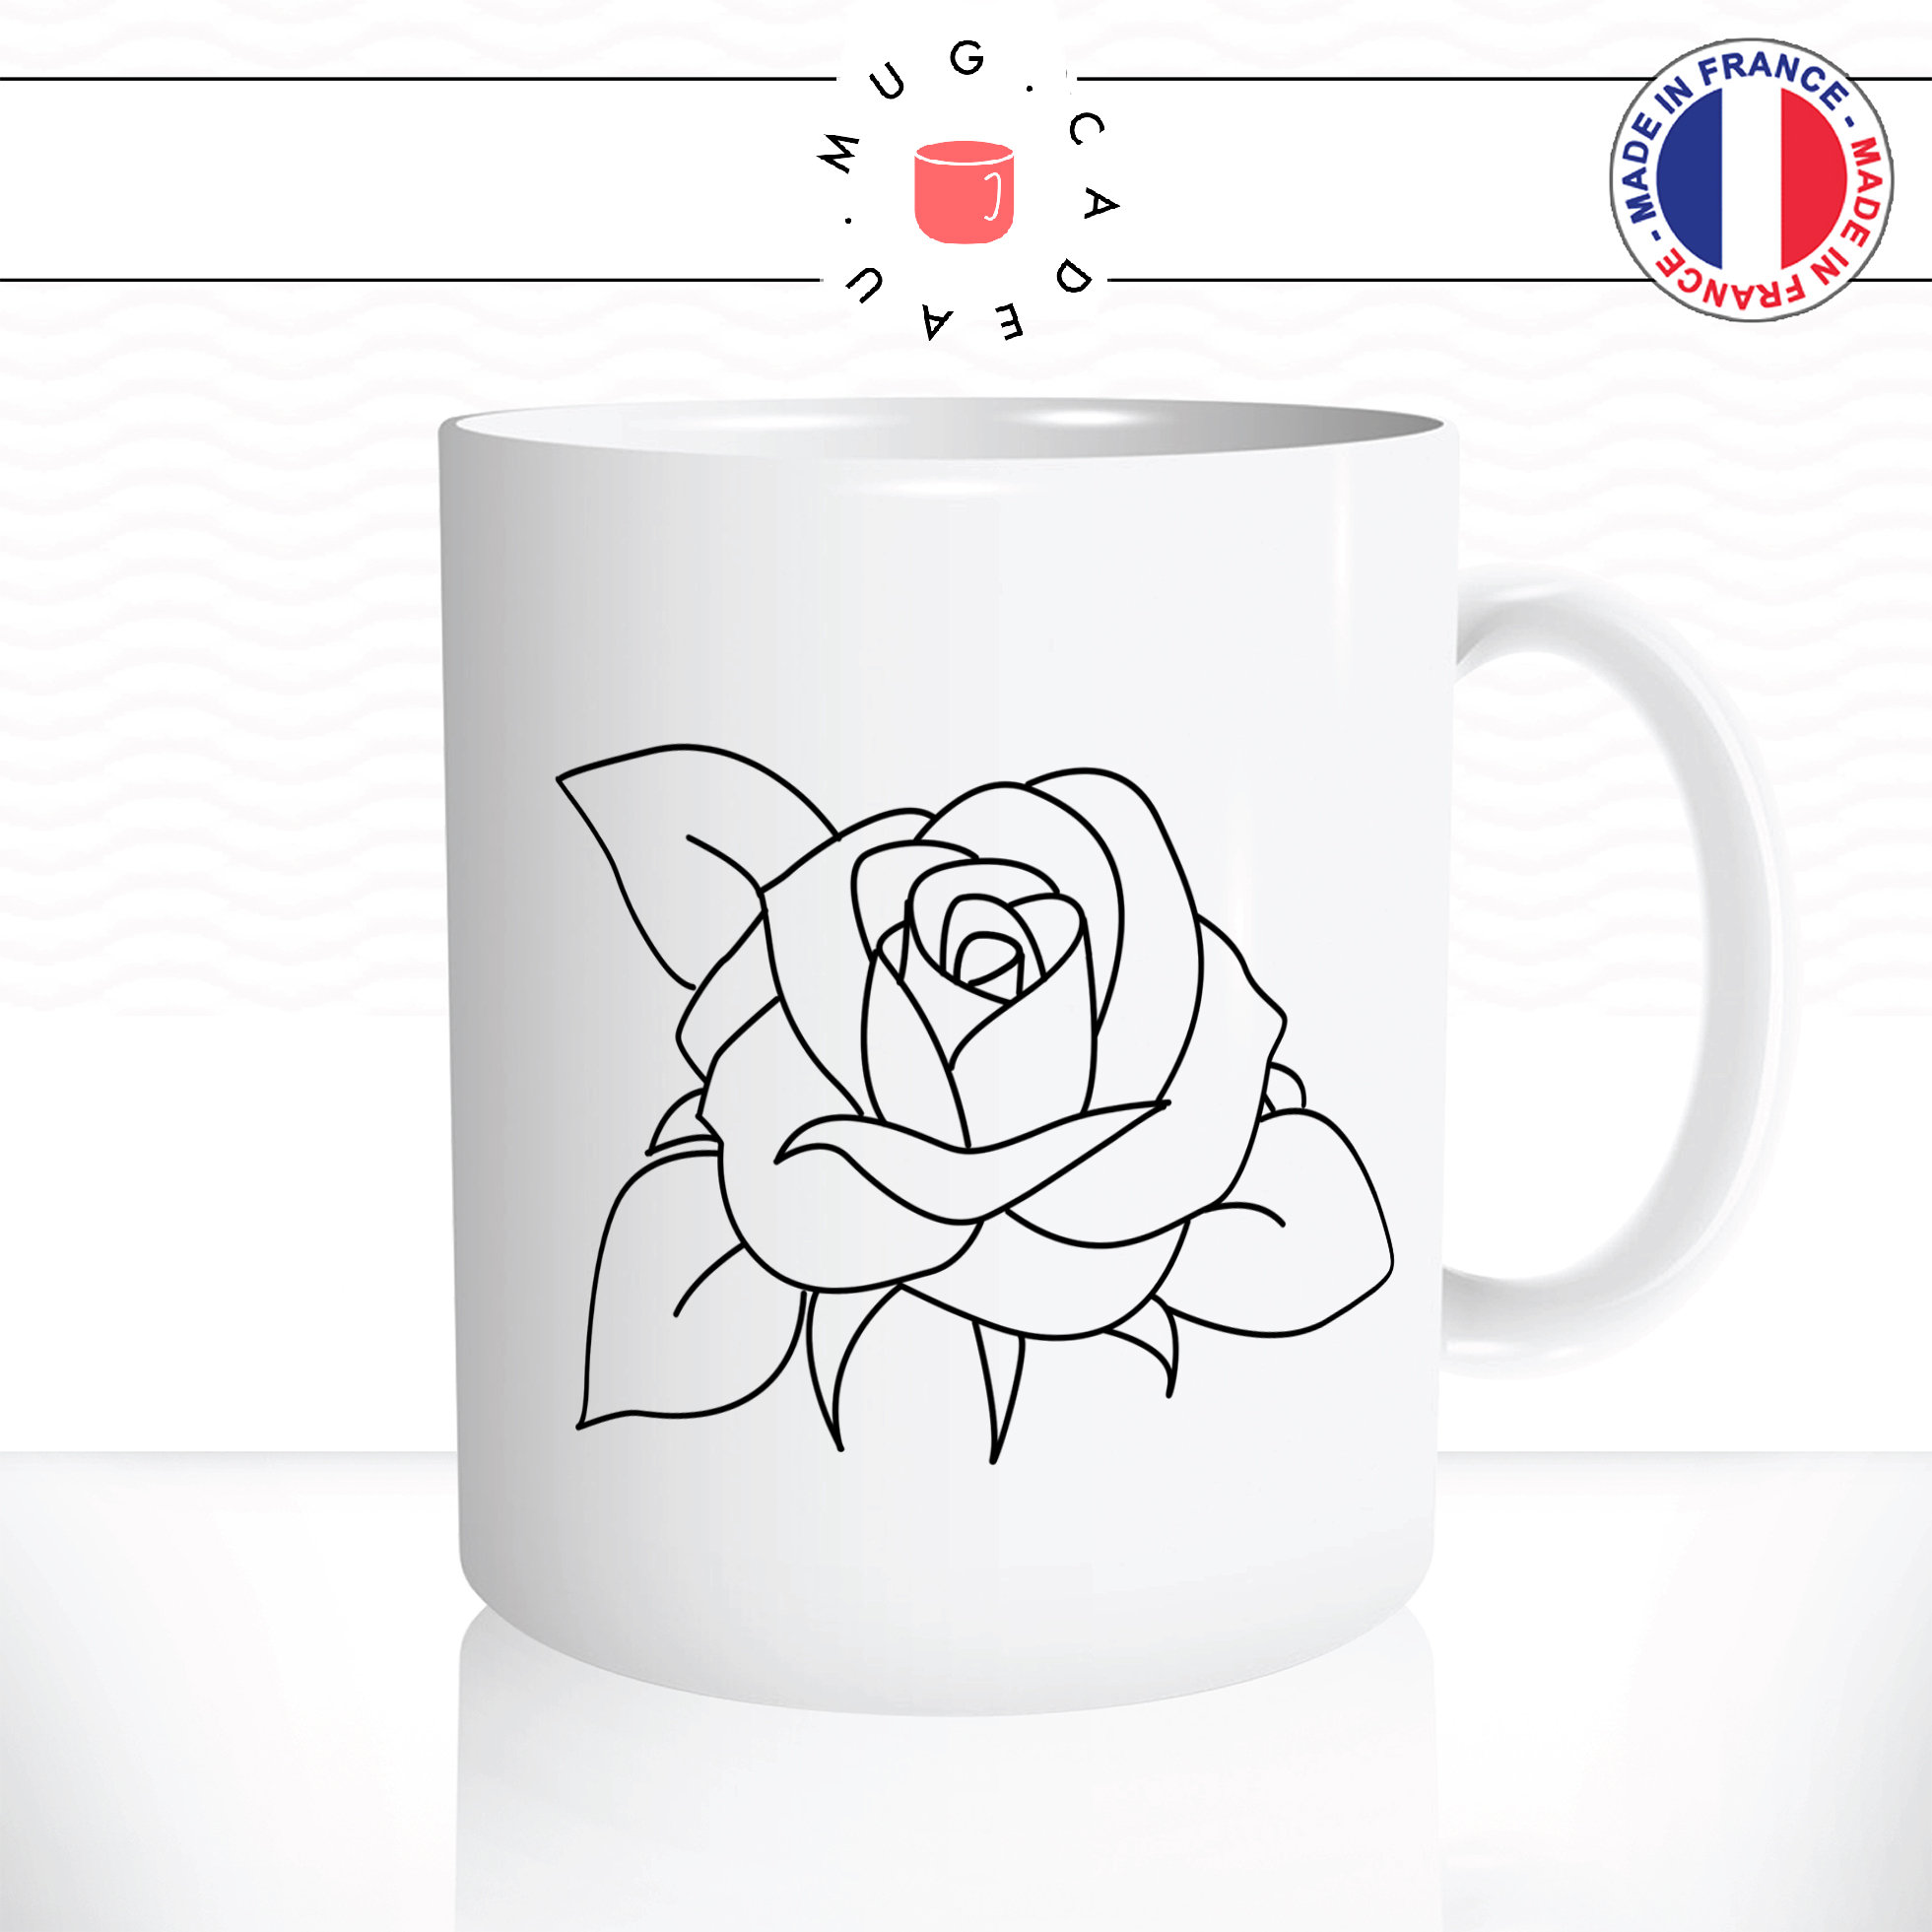 mug-tasse-ref23-fleur-dessin-traits-fins-noir-simple-cafe-the-mugs-tasses-personnalise-anse-droite